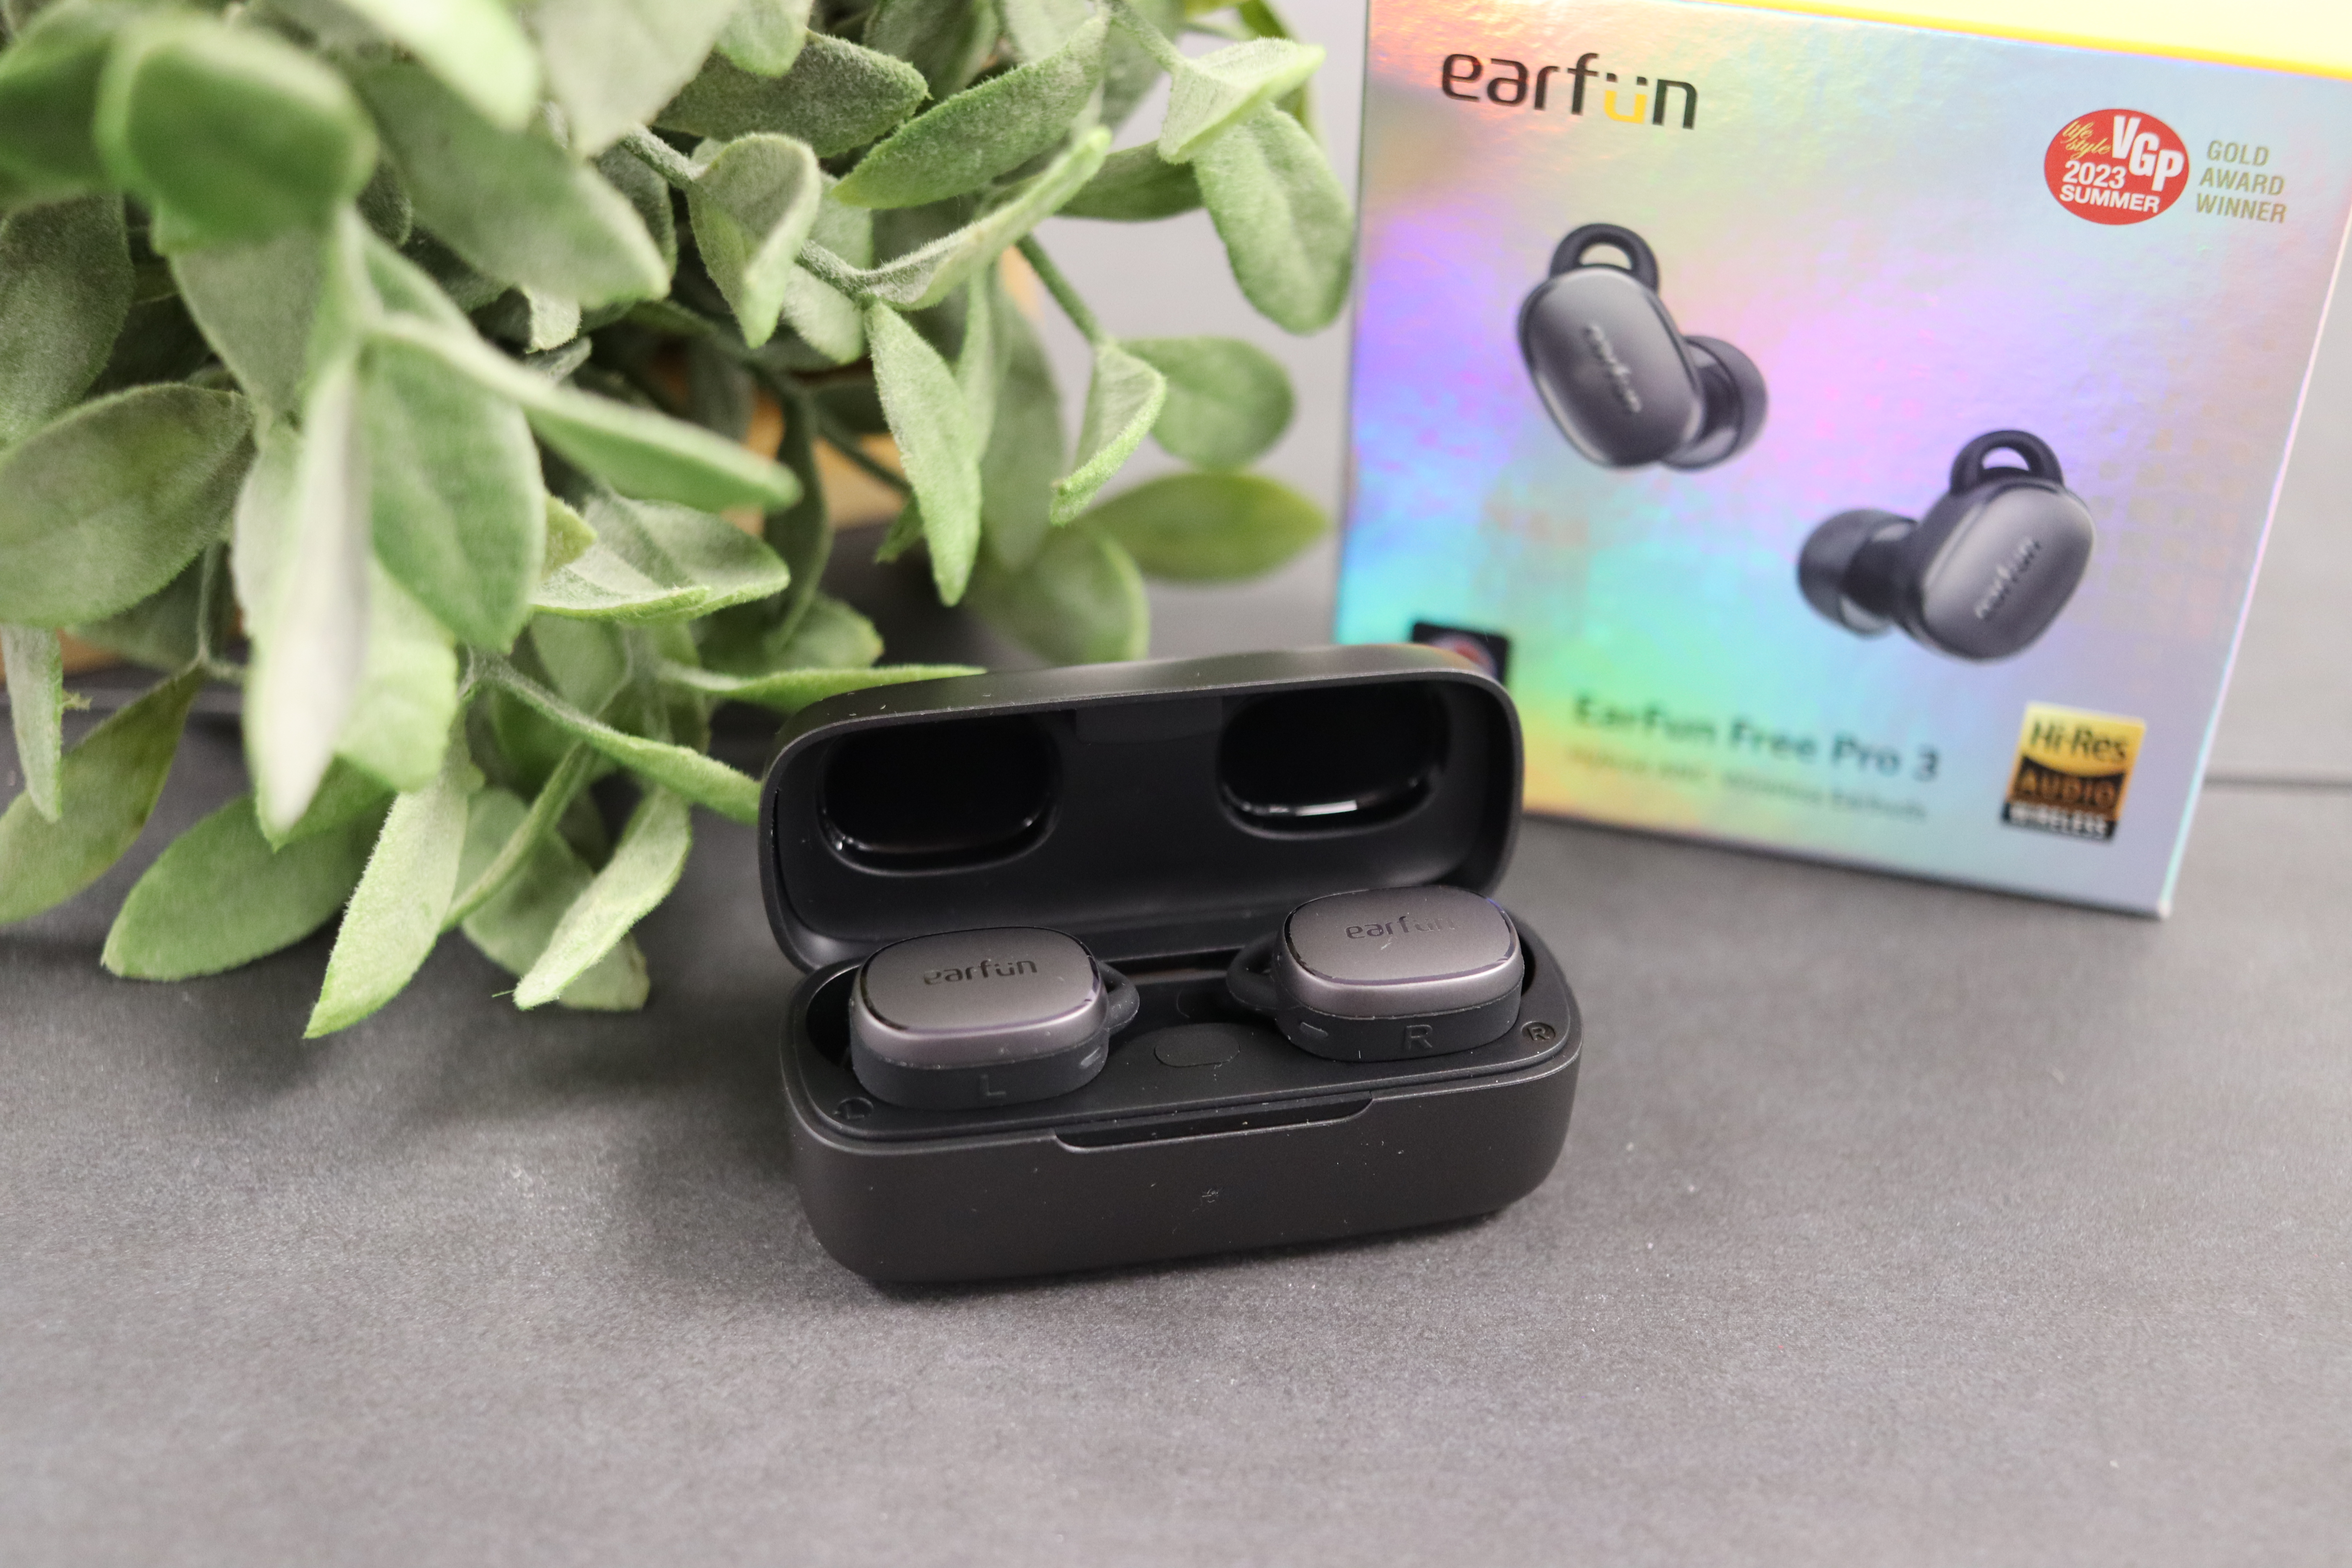 Test: Earfun Free Pro 3 mit Sound ANC-In-Ears Snapdragon